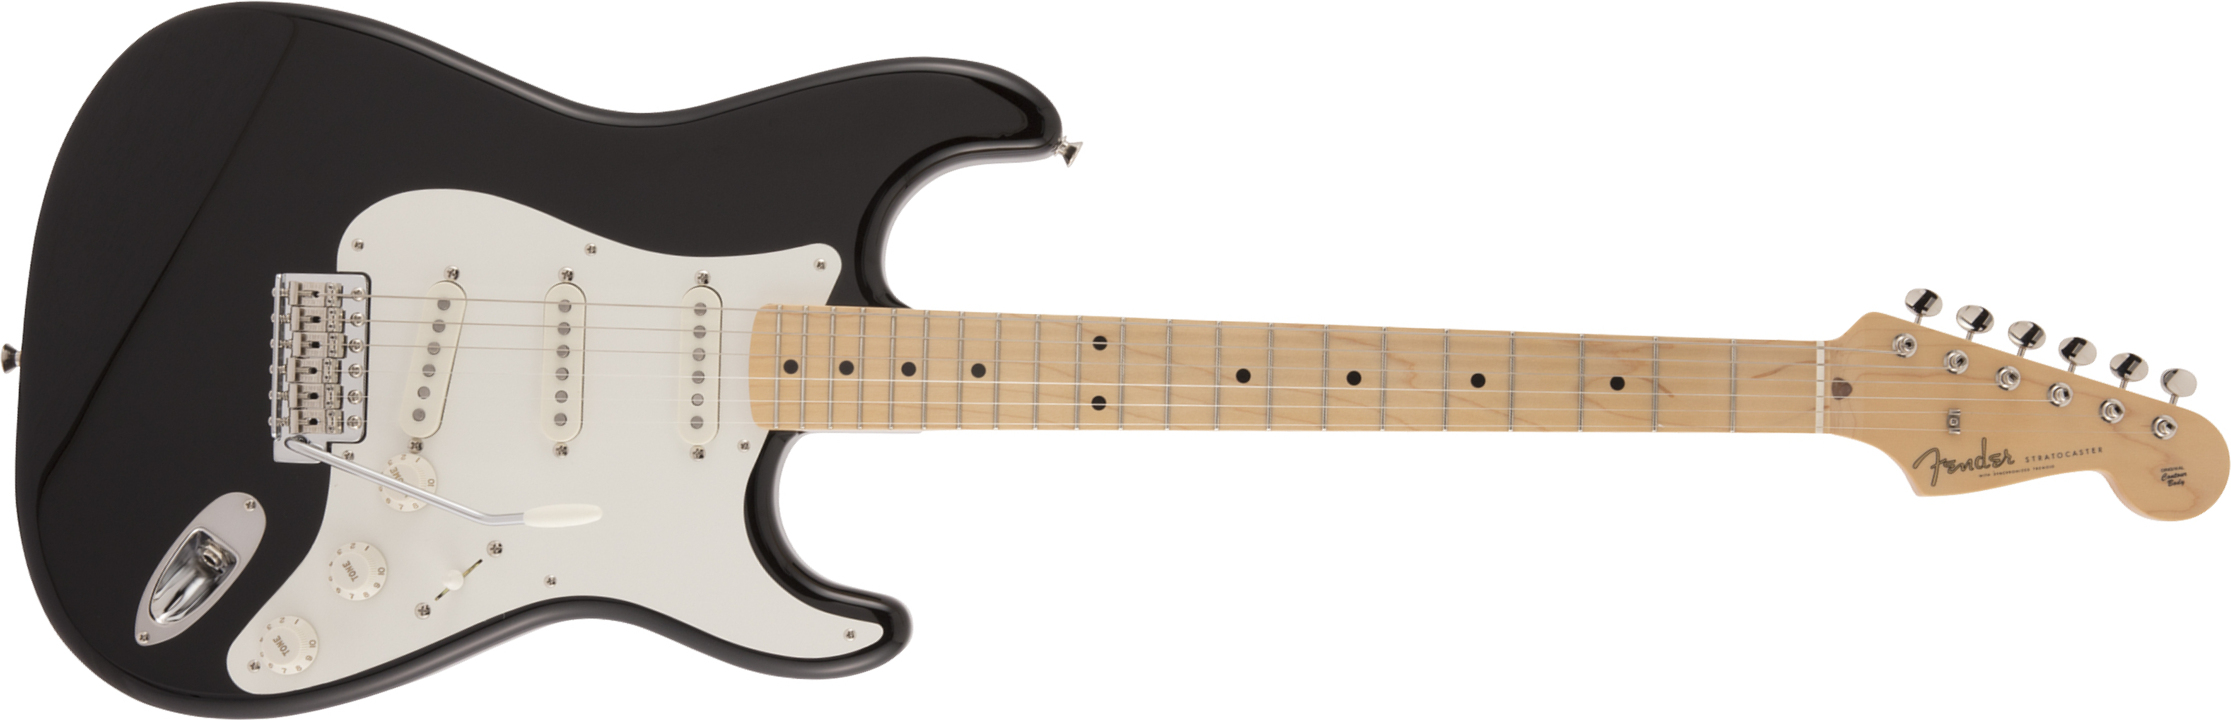 Fender Strat Traditional 50s Jap Mn - Black - Str shape electric guitar - Main picture